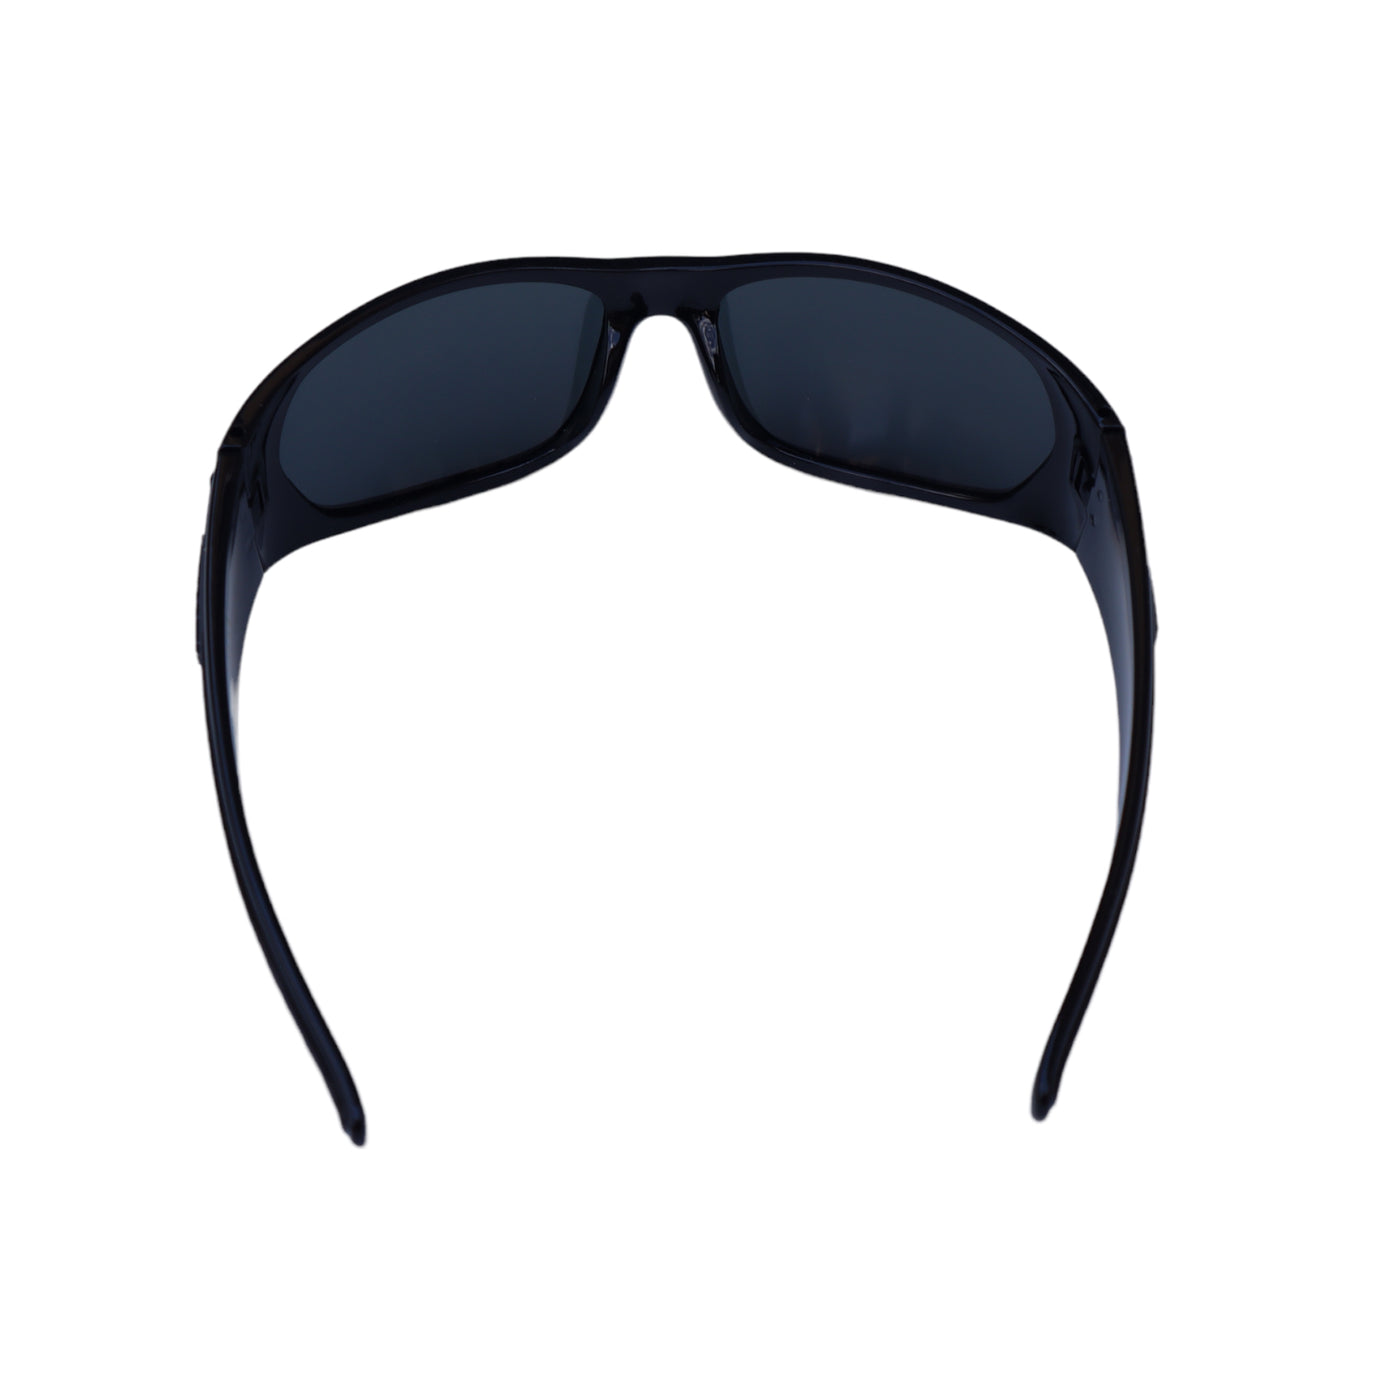 NITROGEN BLACK Color Opaque Acrylic Frame Sunglasses w/ BLUE Polarized Lens